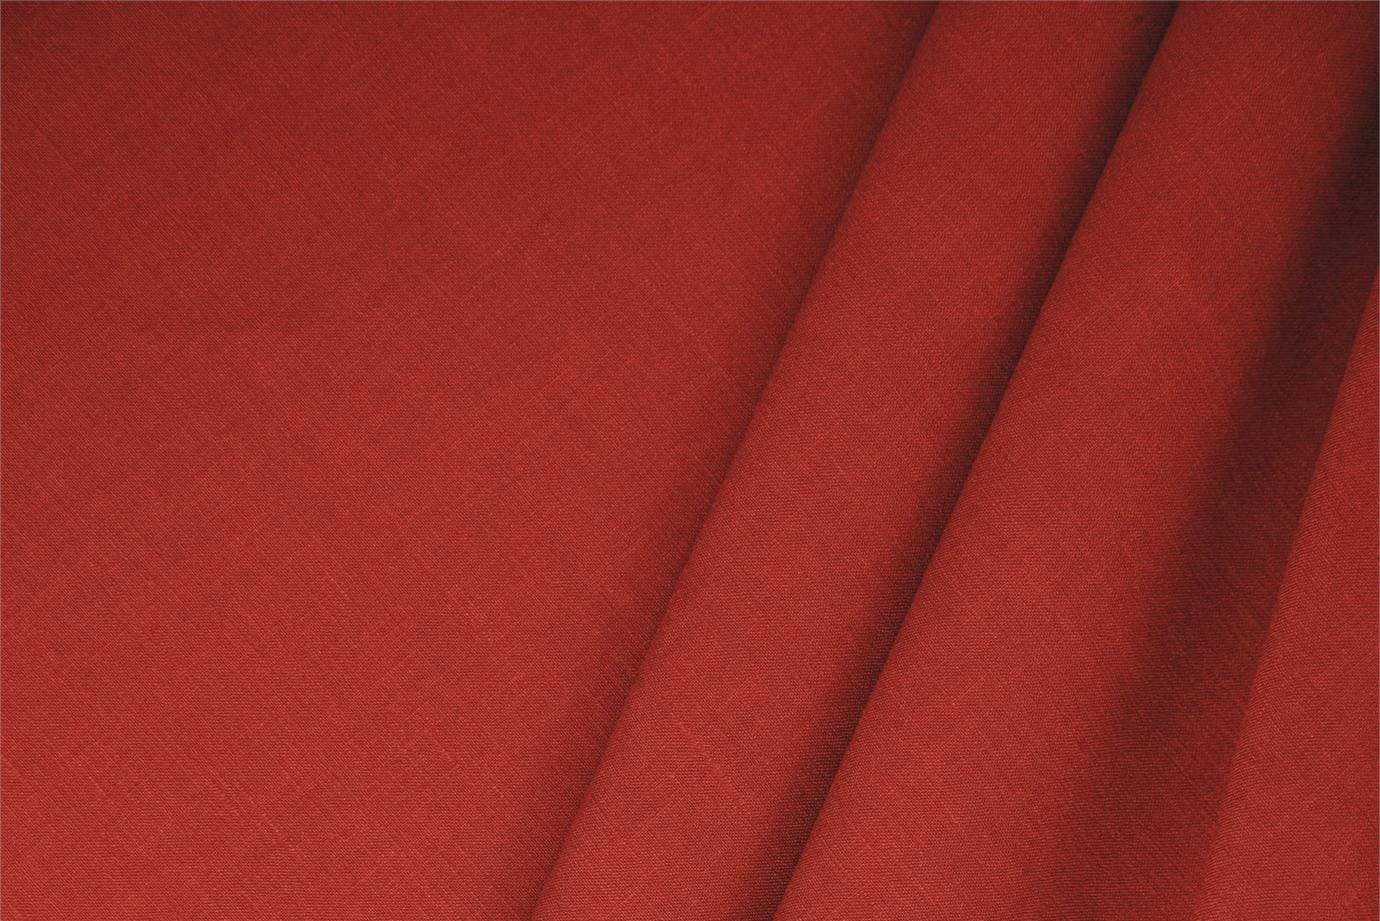 Scarlet Red Linen, Stretch, Viscose Linen Blend fabric for dressmaking